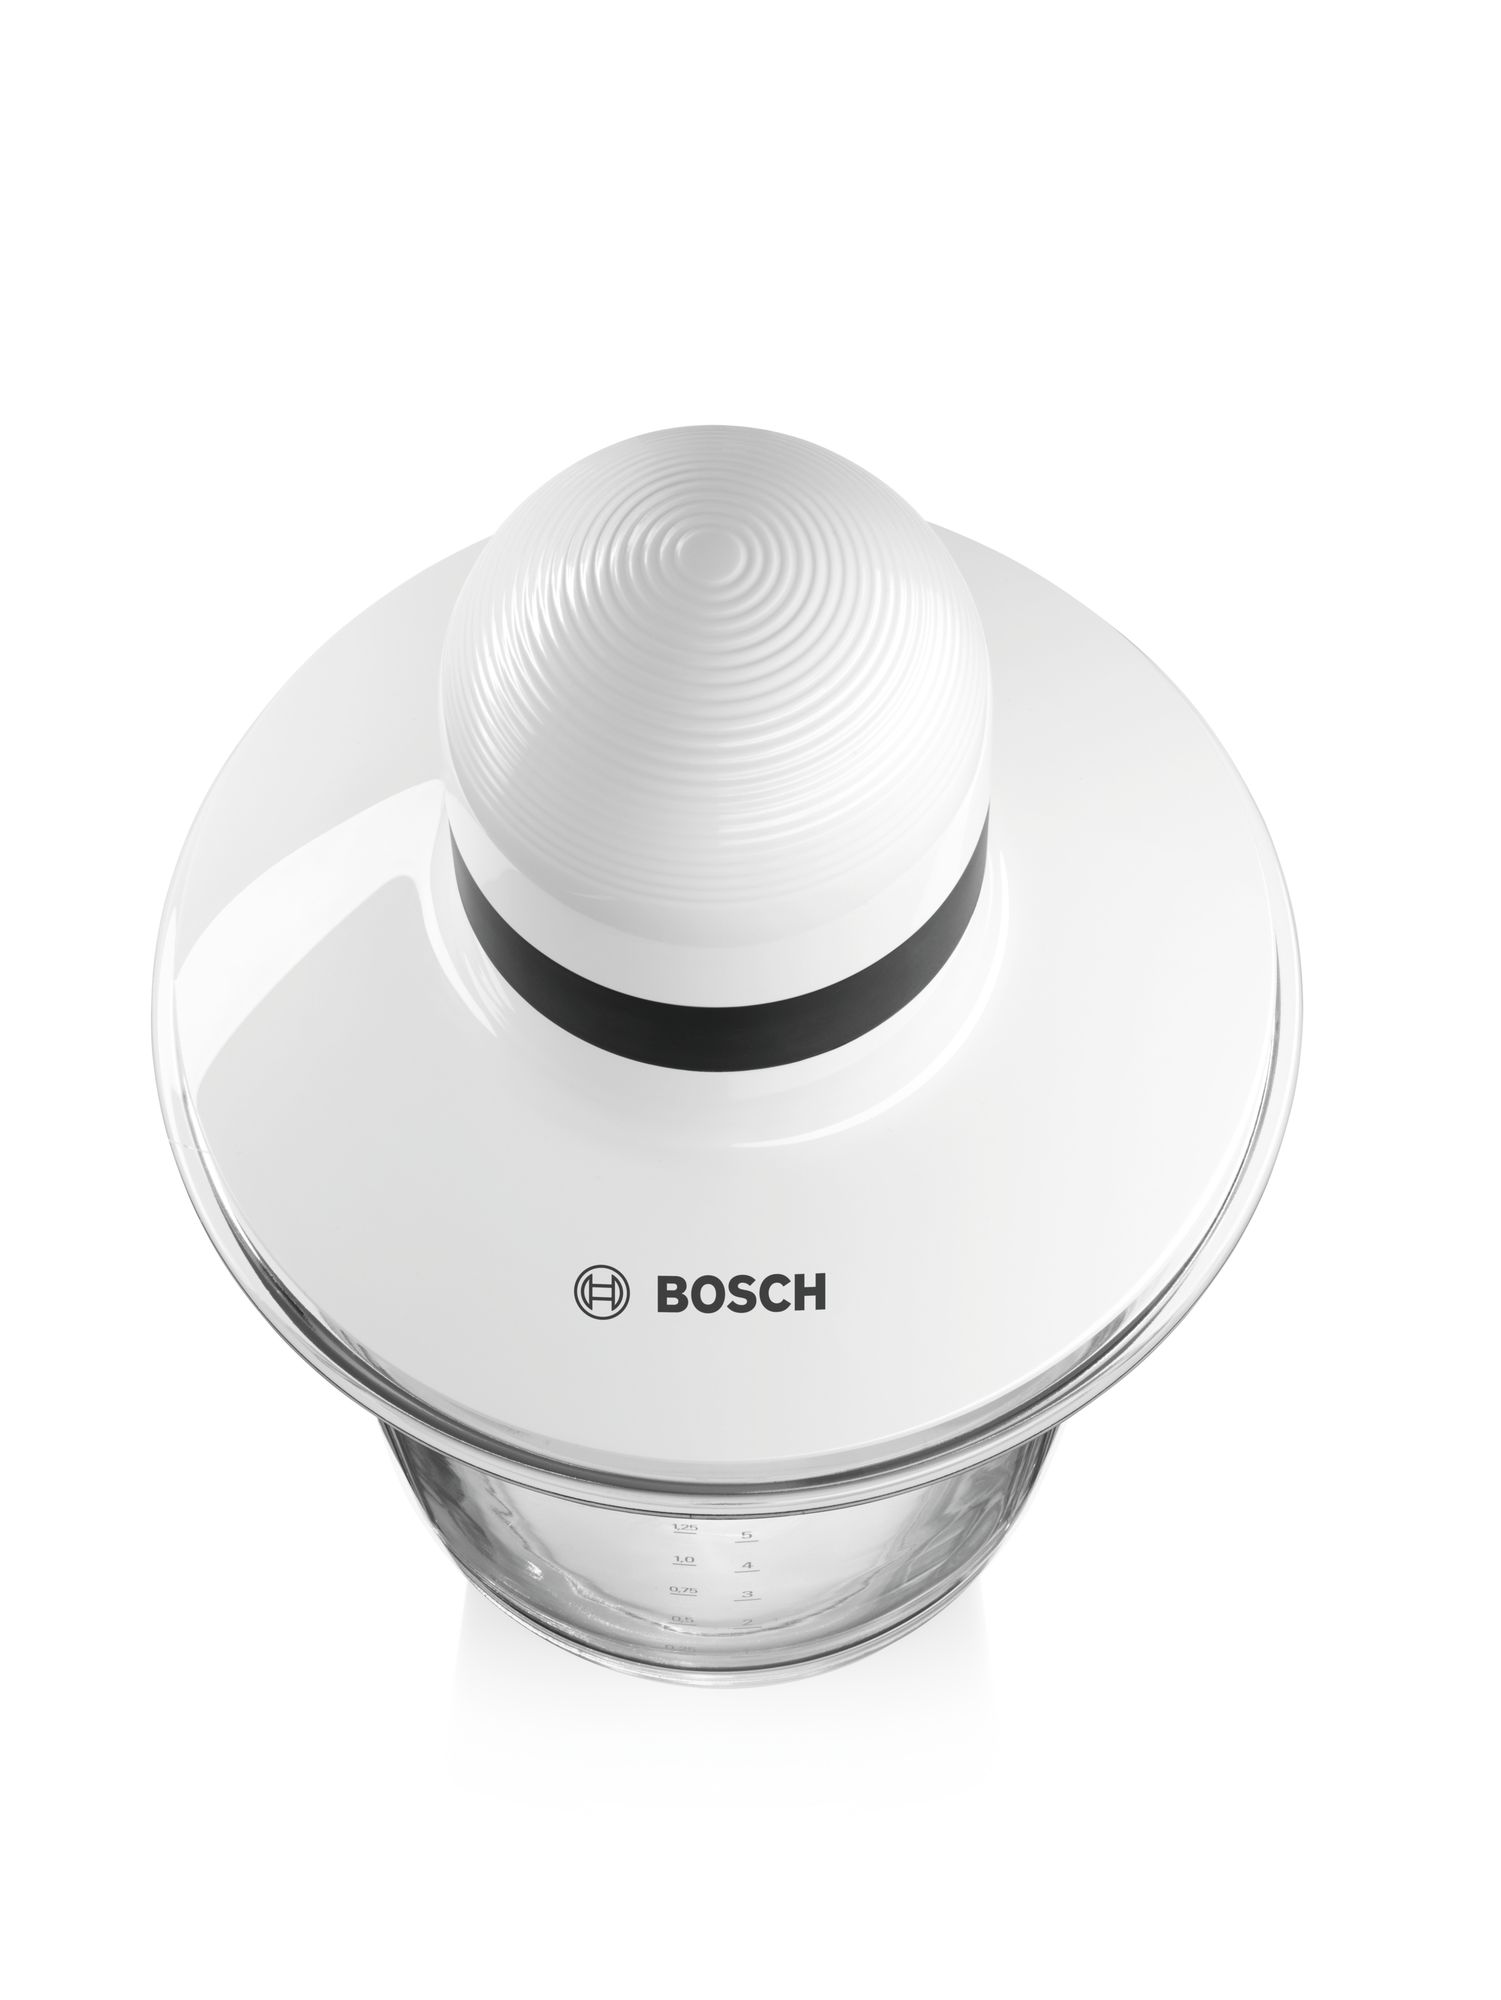 Измельчители Bosch MMR15A1